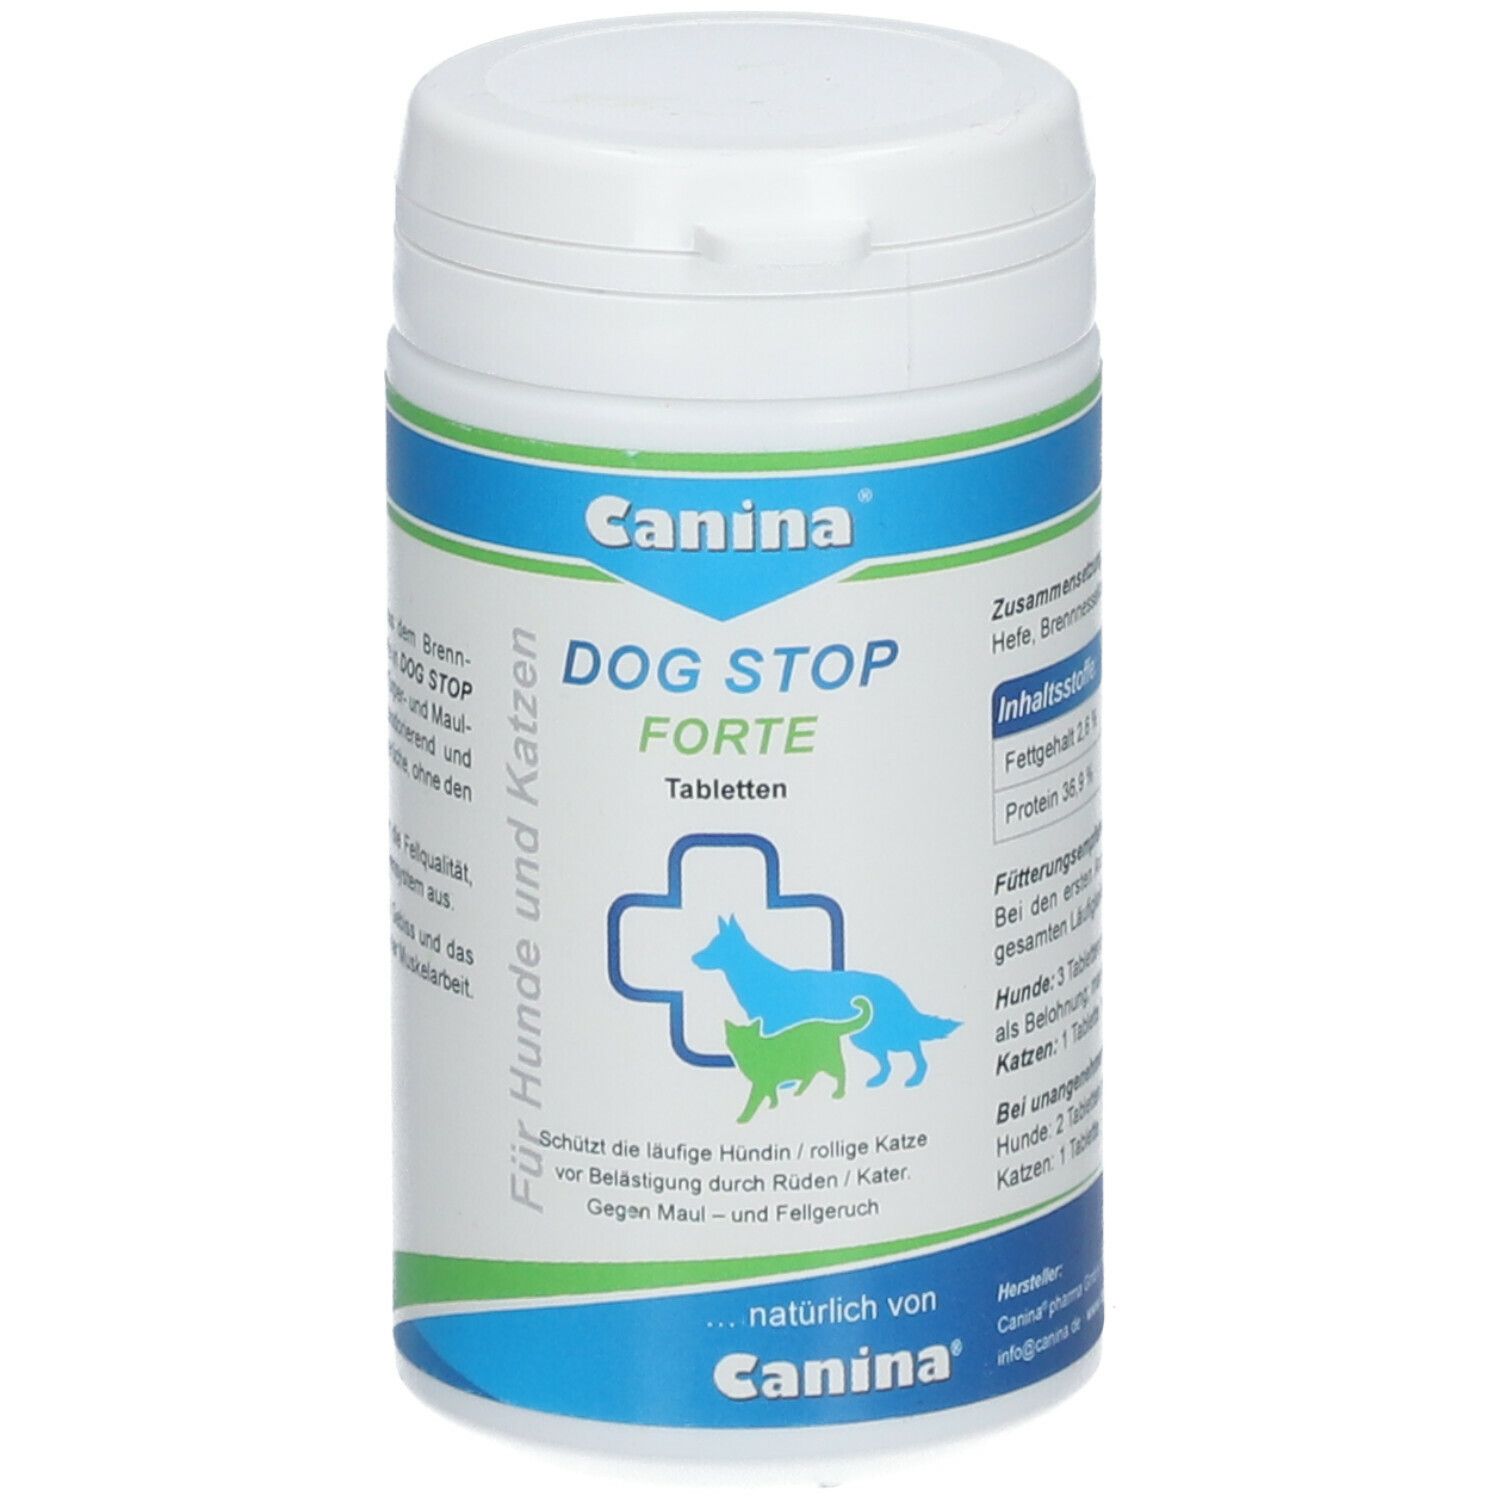 Image of Canina® Dog-Stop forte